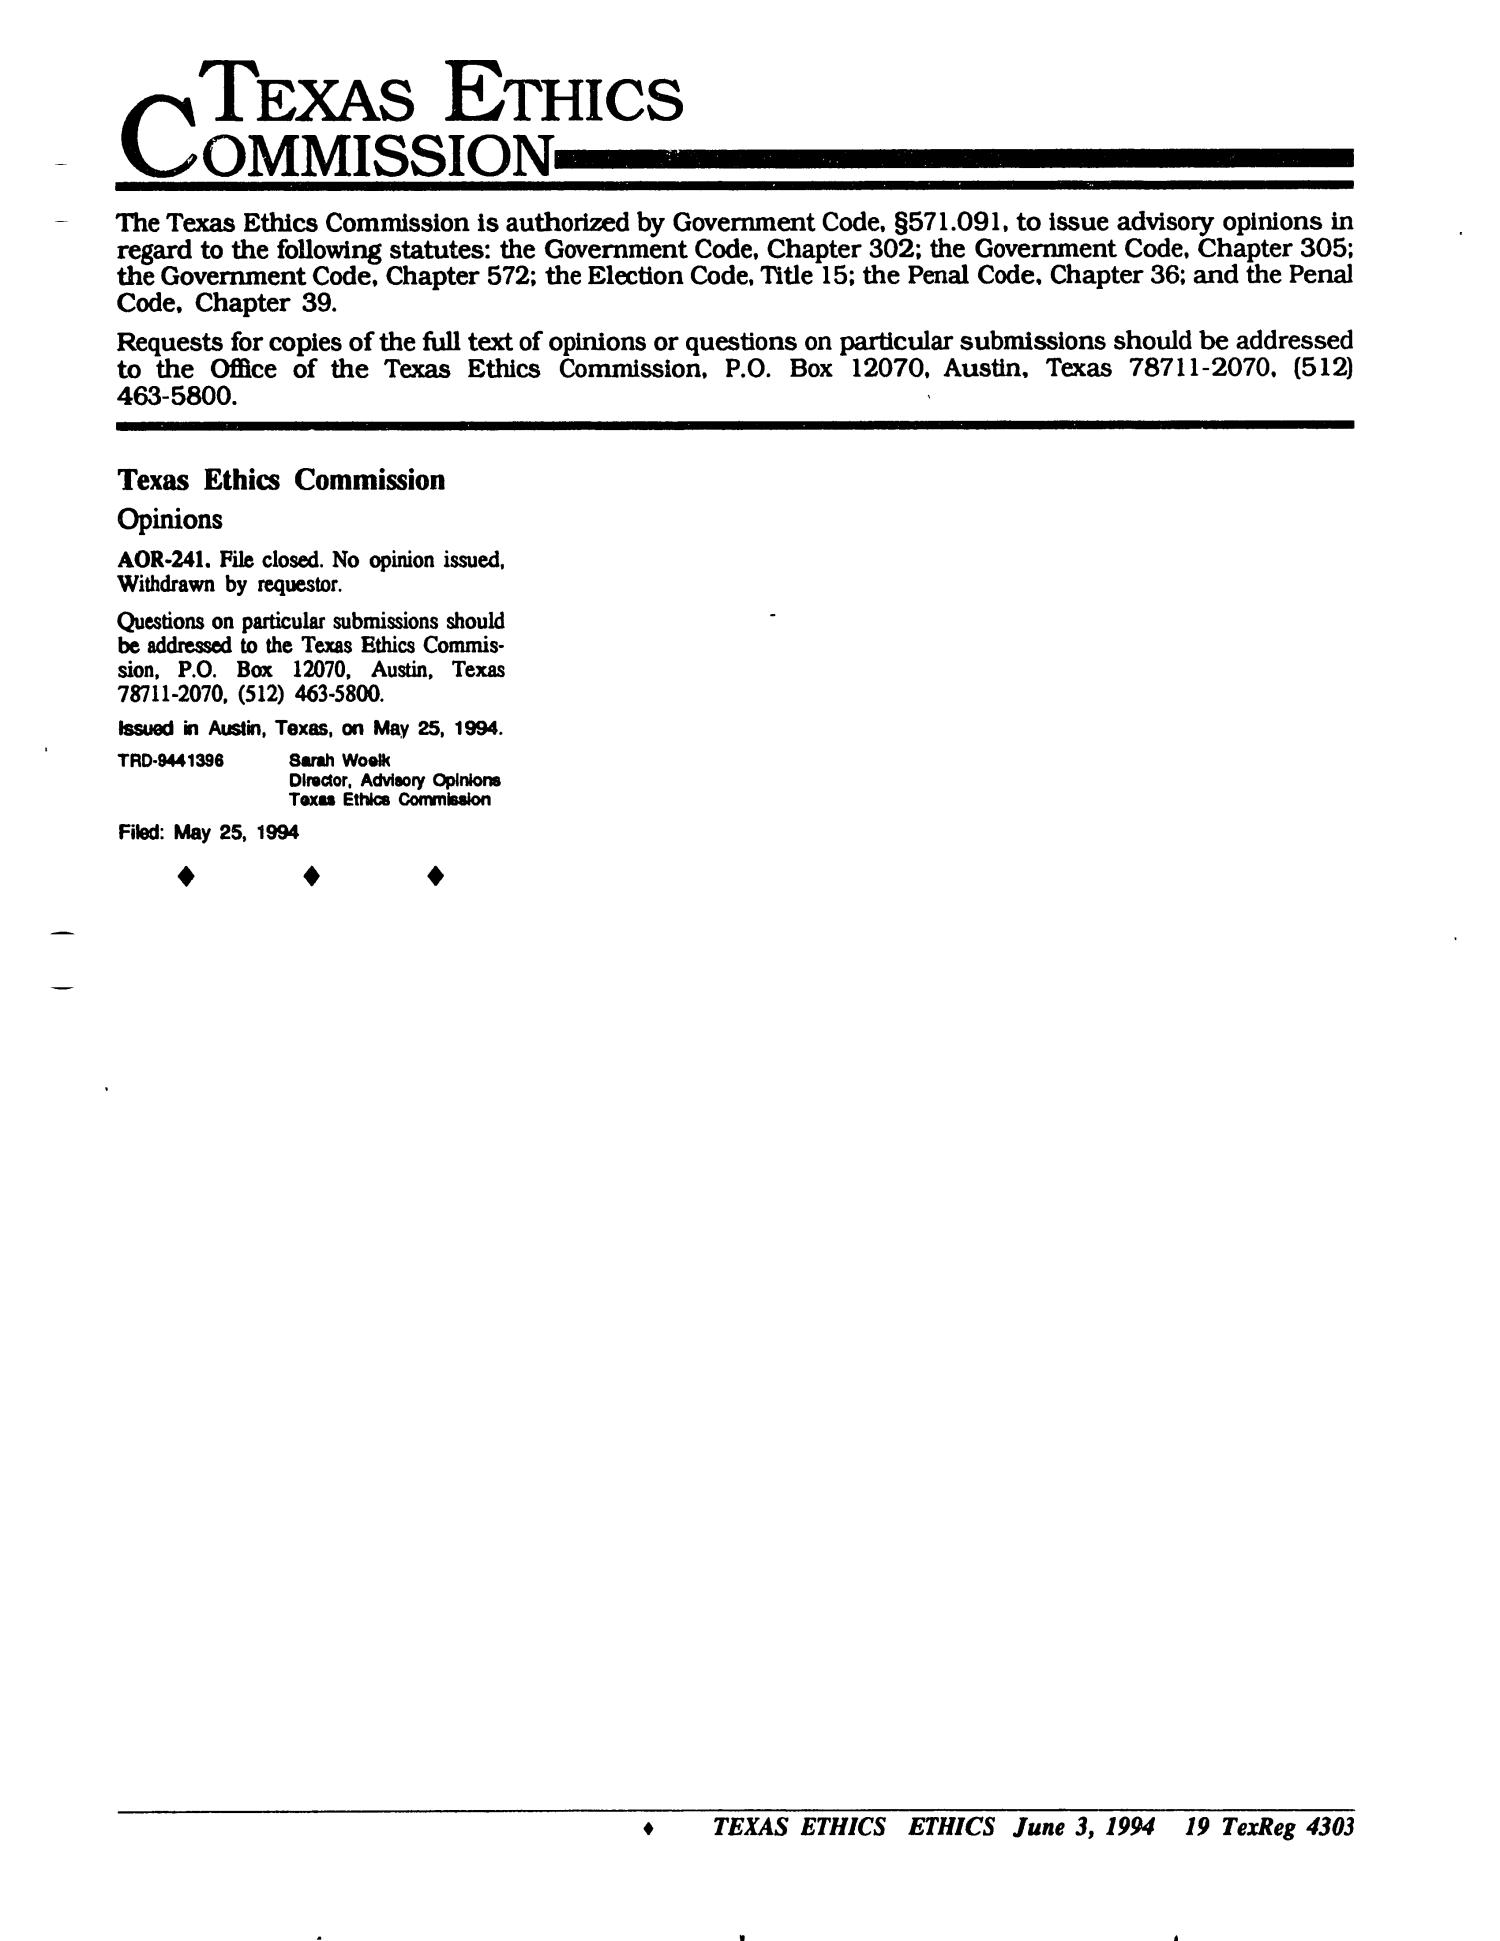 Texas Register, Volume 19, Number 41, Pages 4291-4362, June 3, 1994
                                                
                                                    4303
                                                